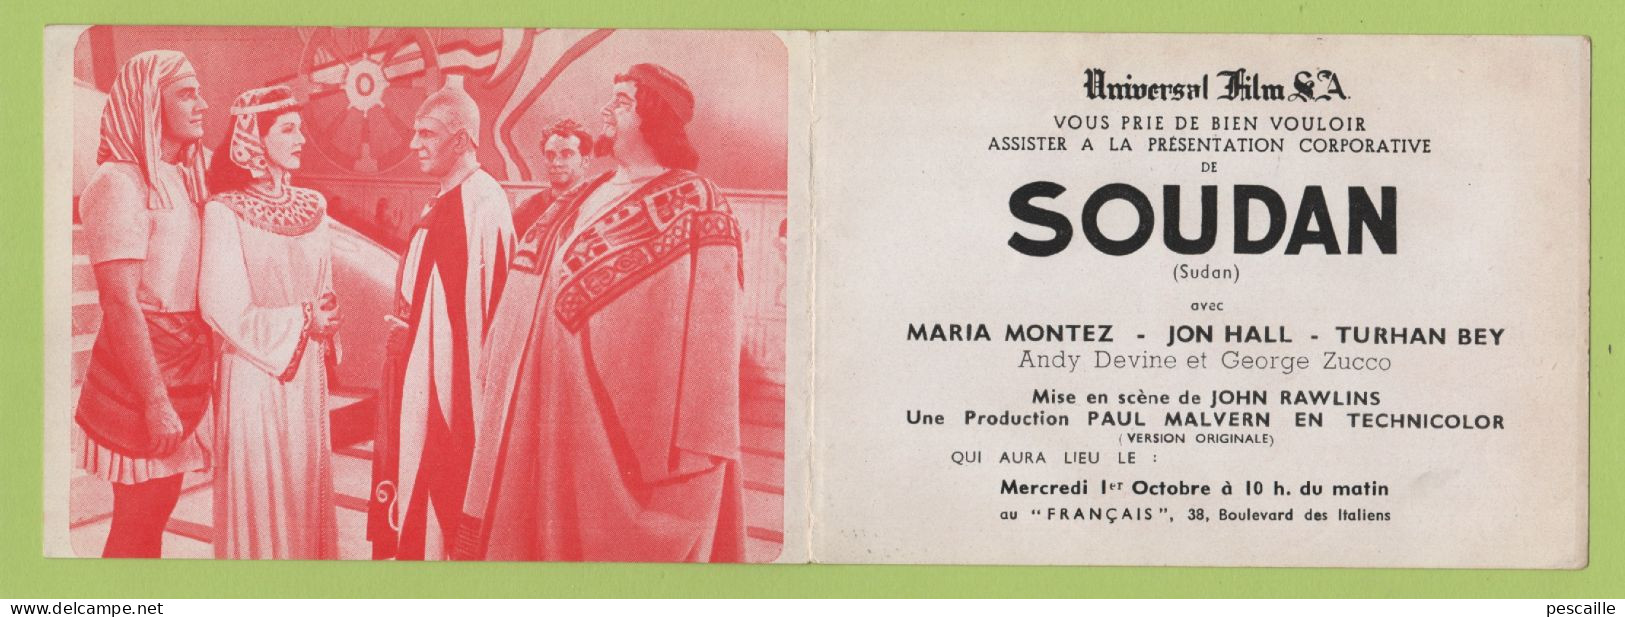 1945 ? - INVITATION UNIVERSAL FILM S.A. A LA PROJECTION DU FILM SOUDAN SUDAN AVEC MARIA MONTEZ JON HALL TURHAN BEY ... - Werbetrailer